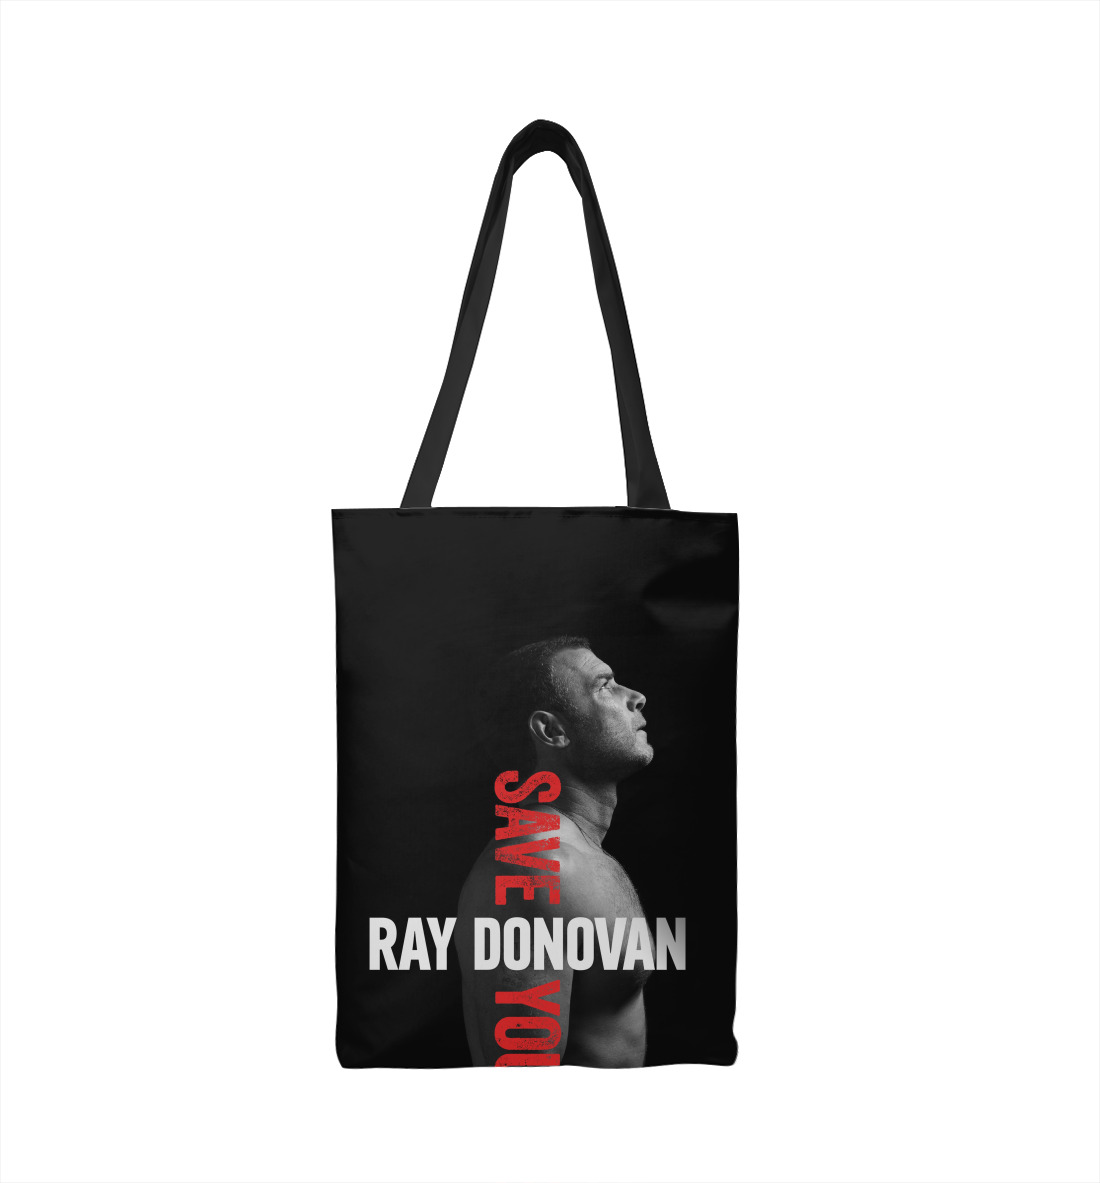 Ray Donovan marie donovan bare necessities